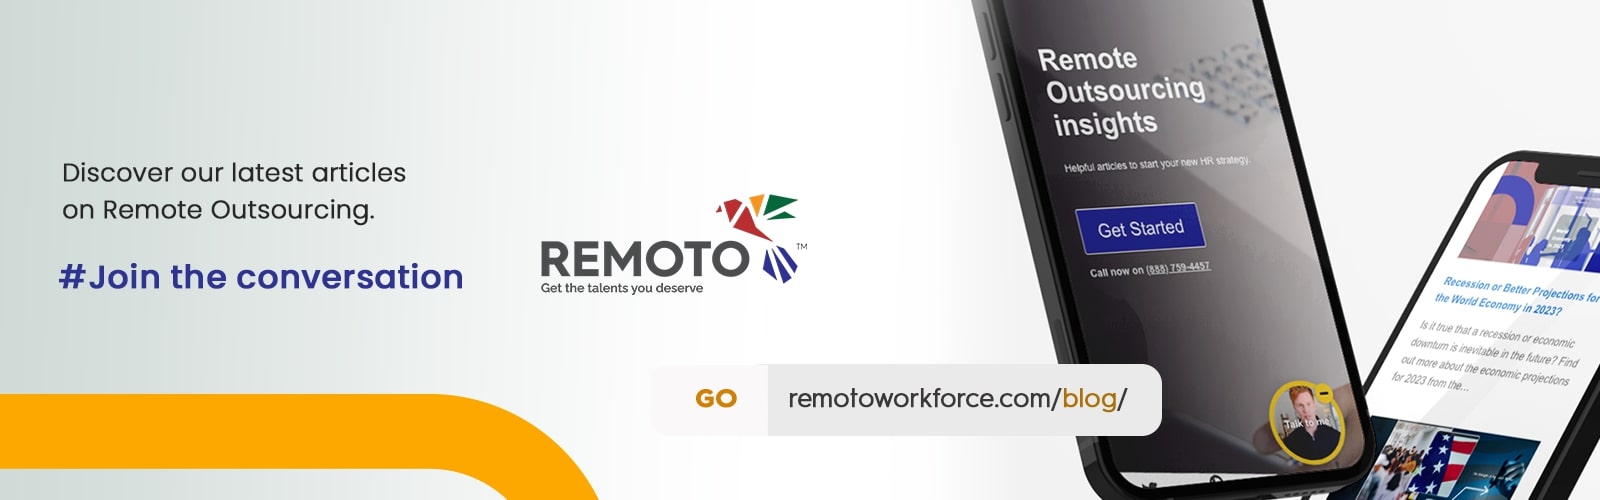 Virtual Assistant Upwork - MUST watch before hiring! - Remoto Workforce